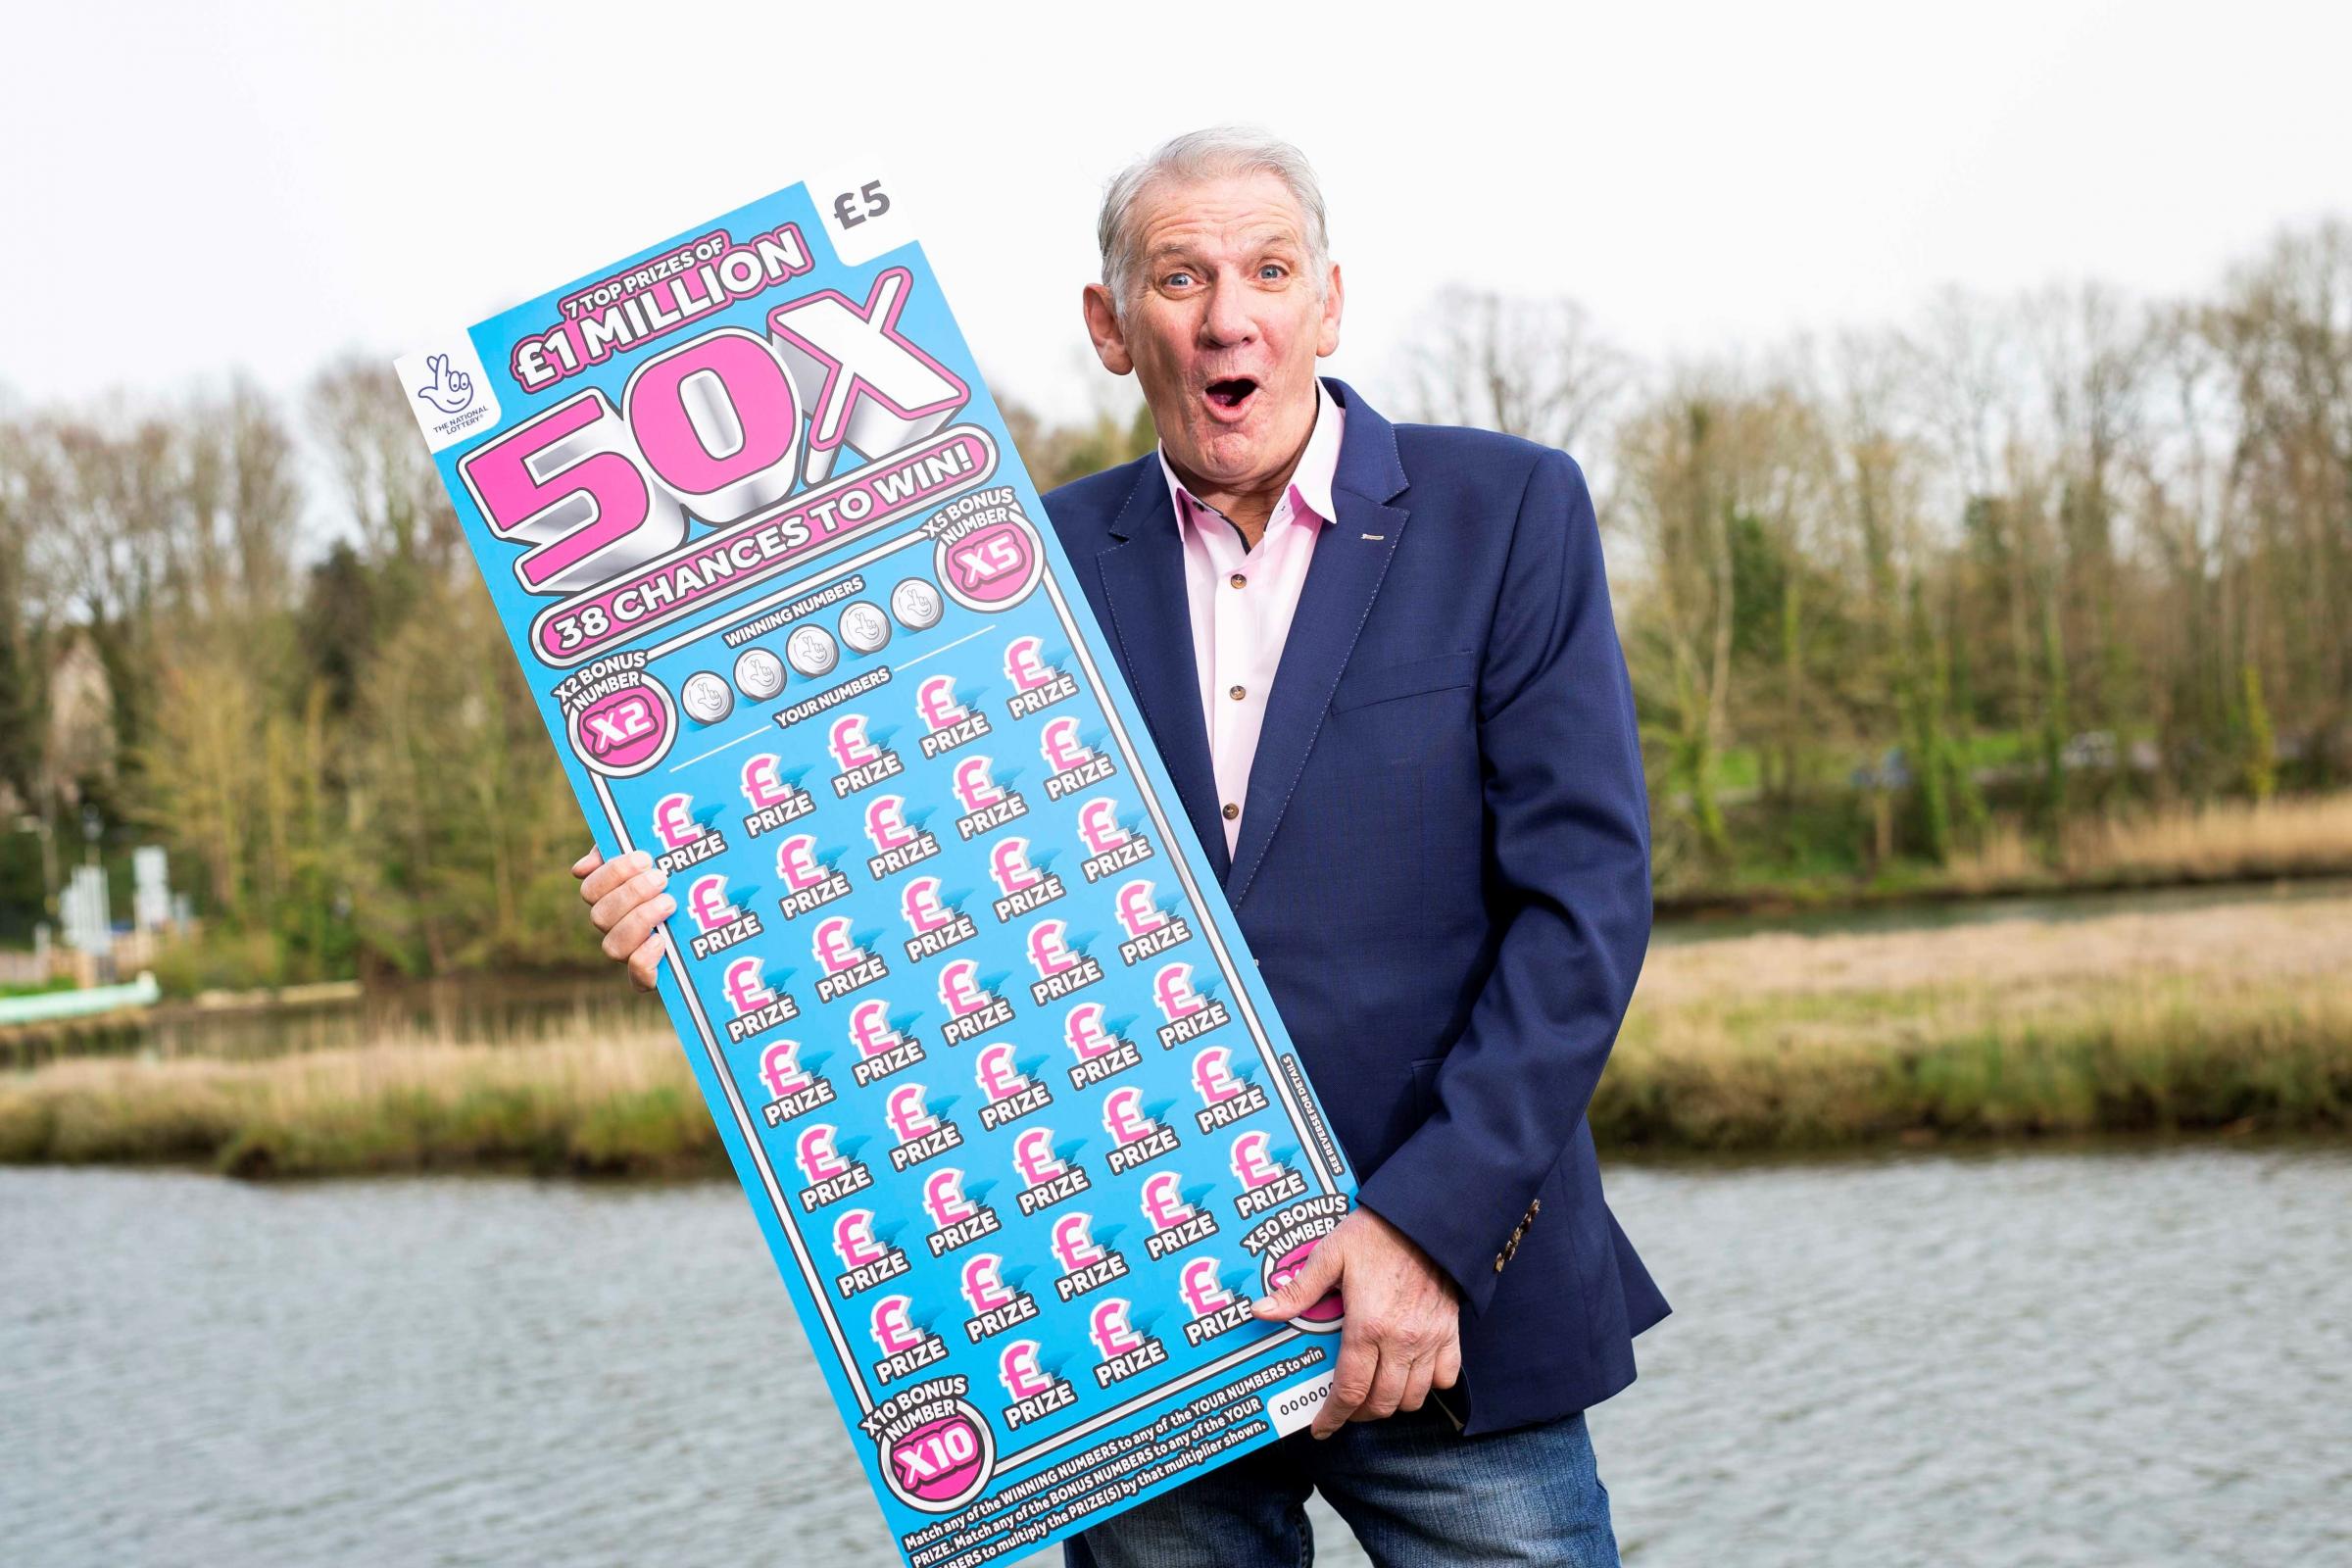 John McFadden (63) from Southampton won £1,000,000 on a National Lottery scratch card